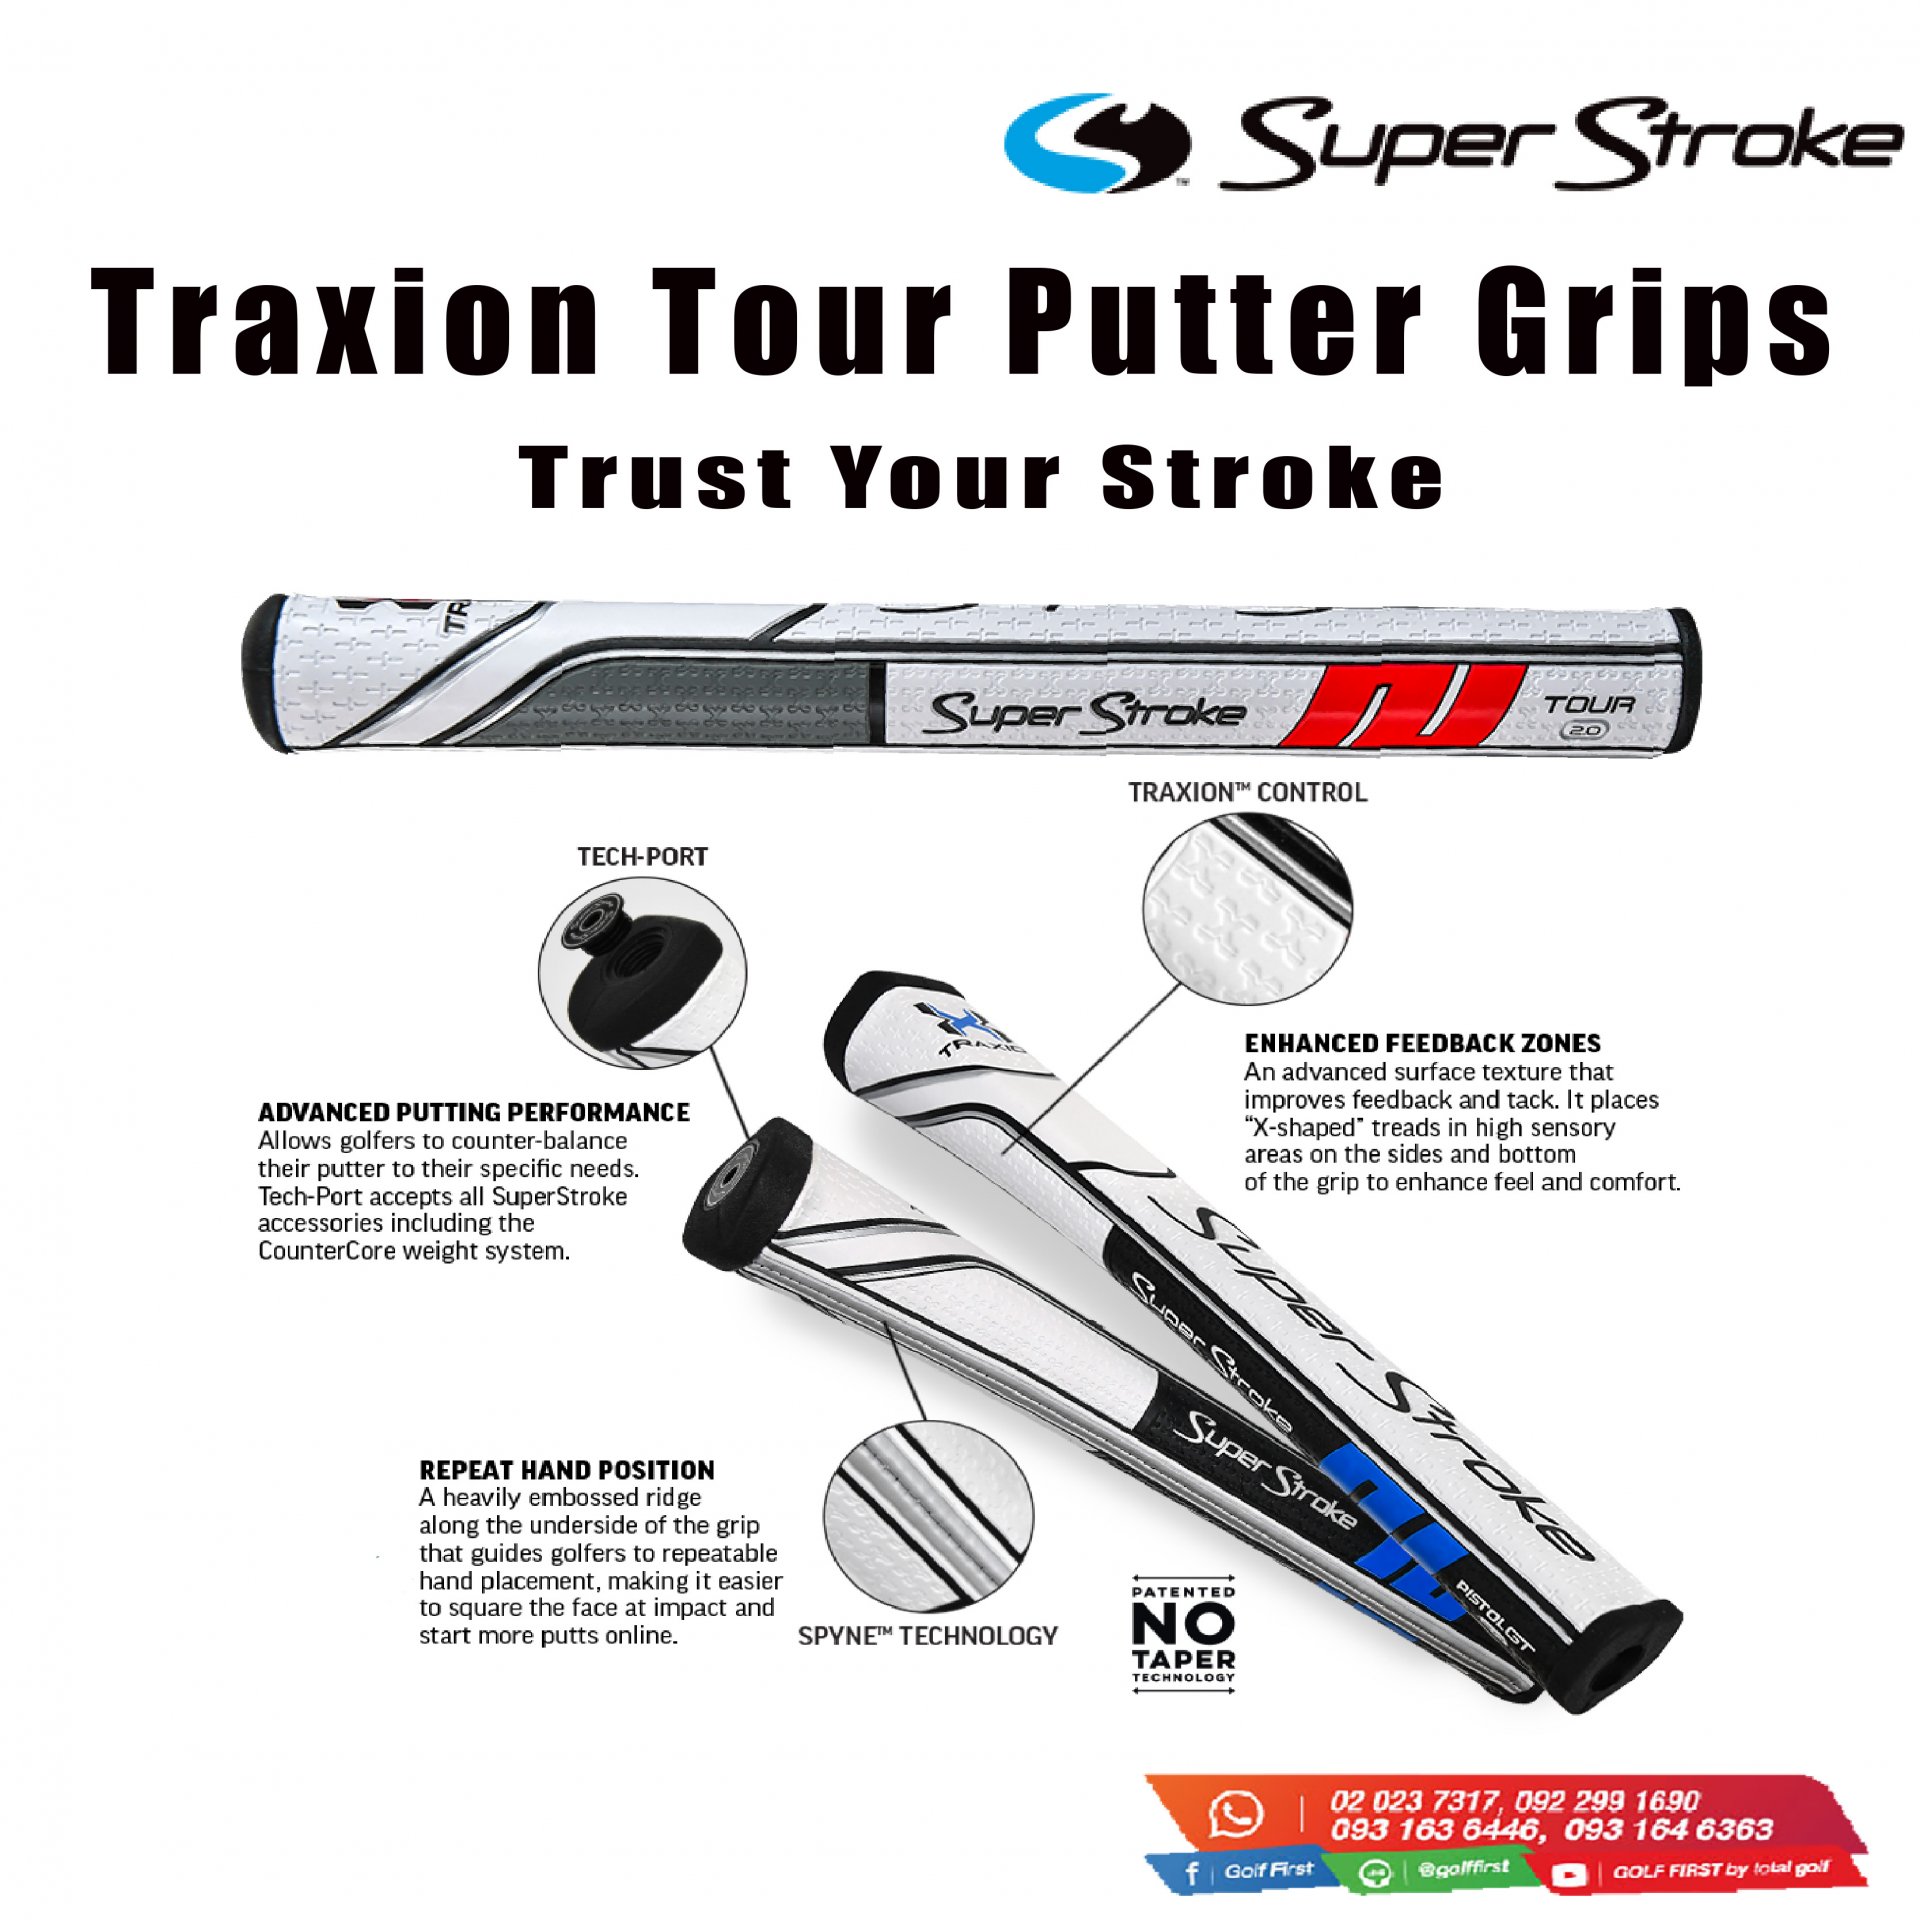 Super Stroke Traxion Tour Putter Grips